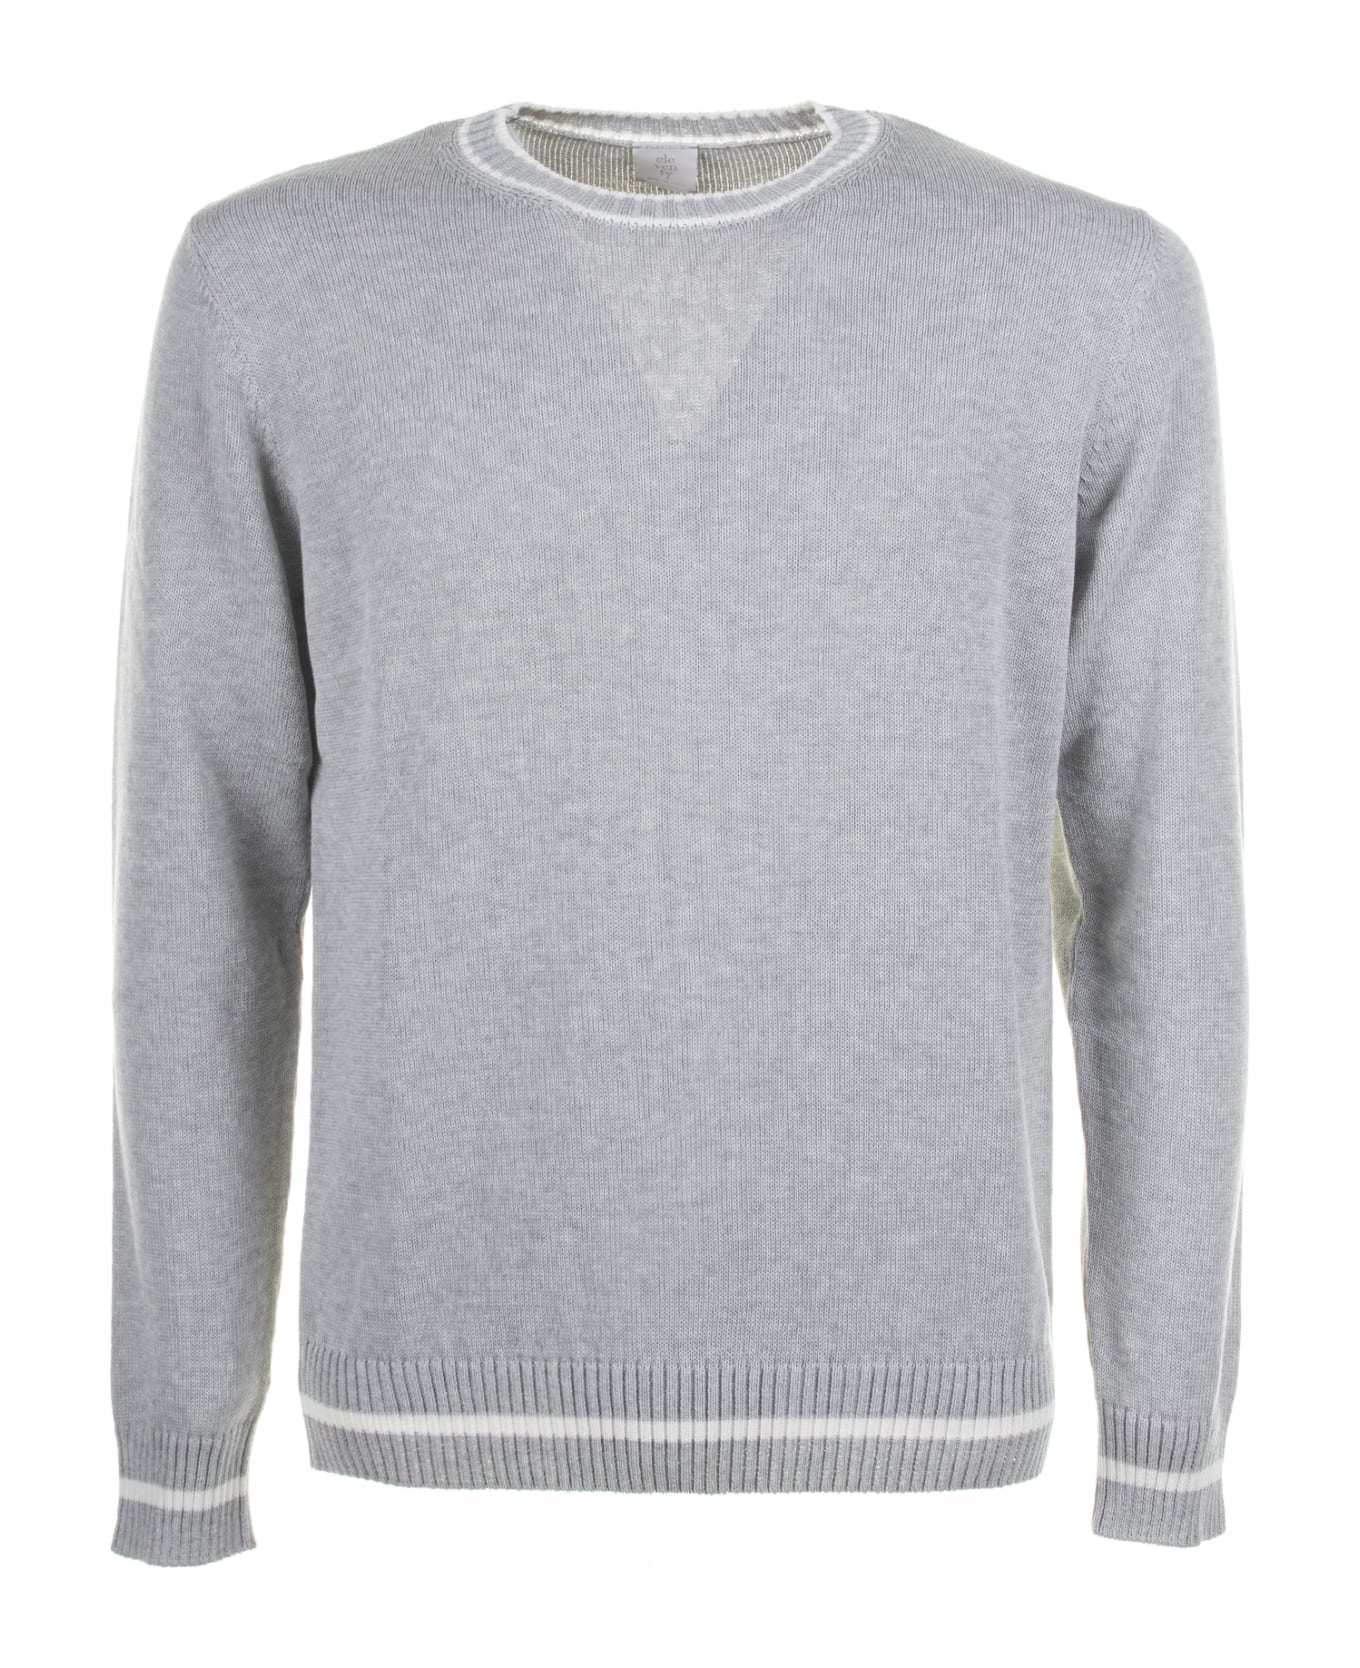 Eleventy Light Gray Crew Neck Sweater - GRIGIO CHIARO BIANCO ニットウェア